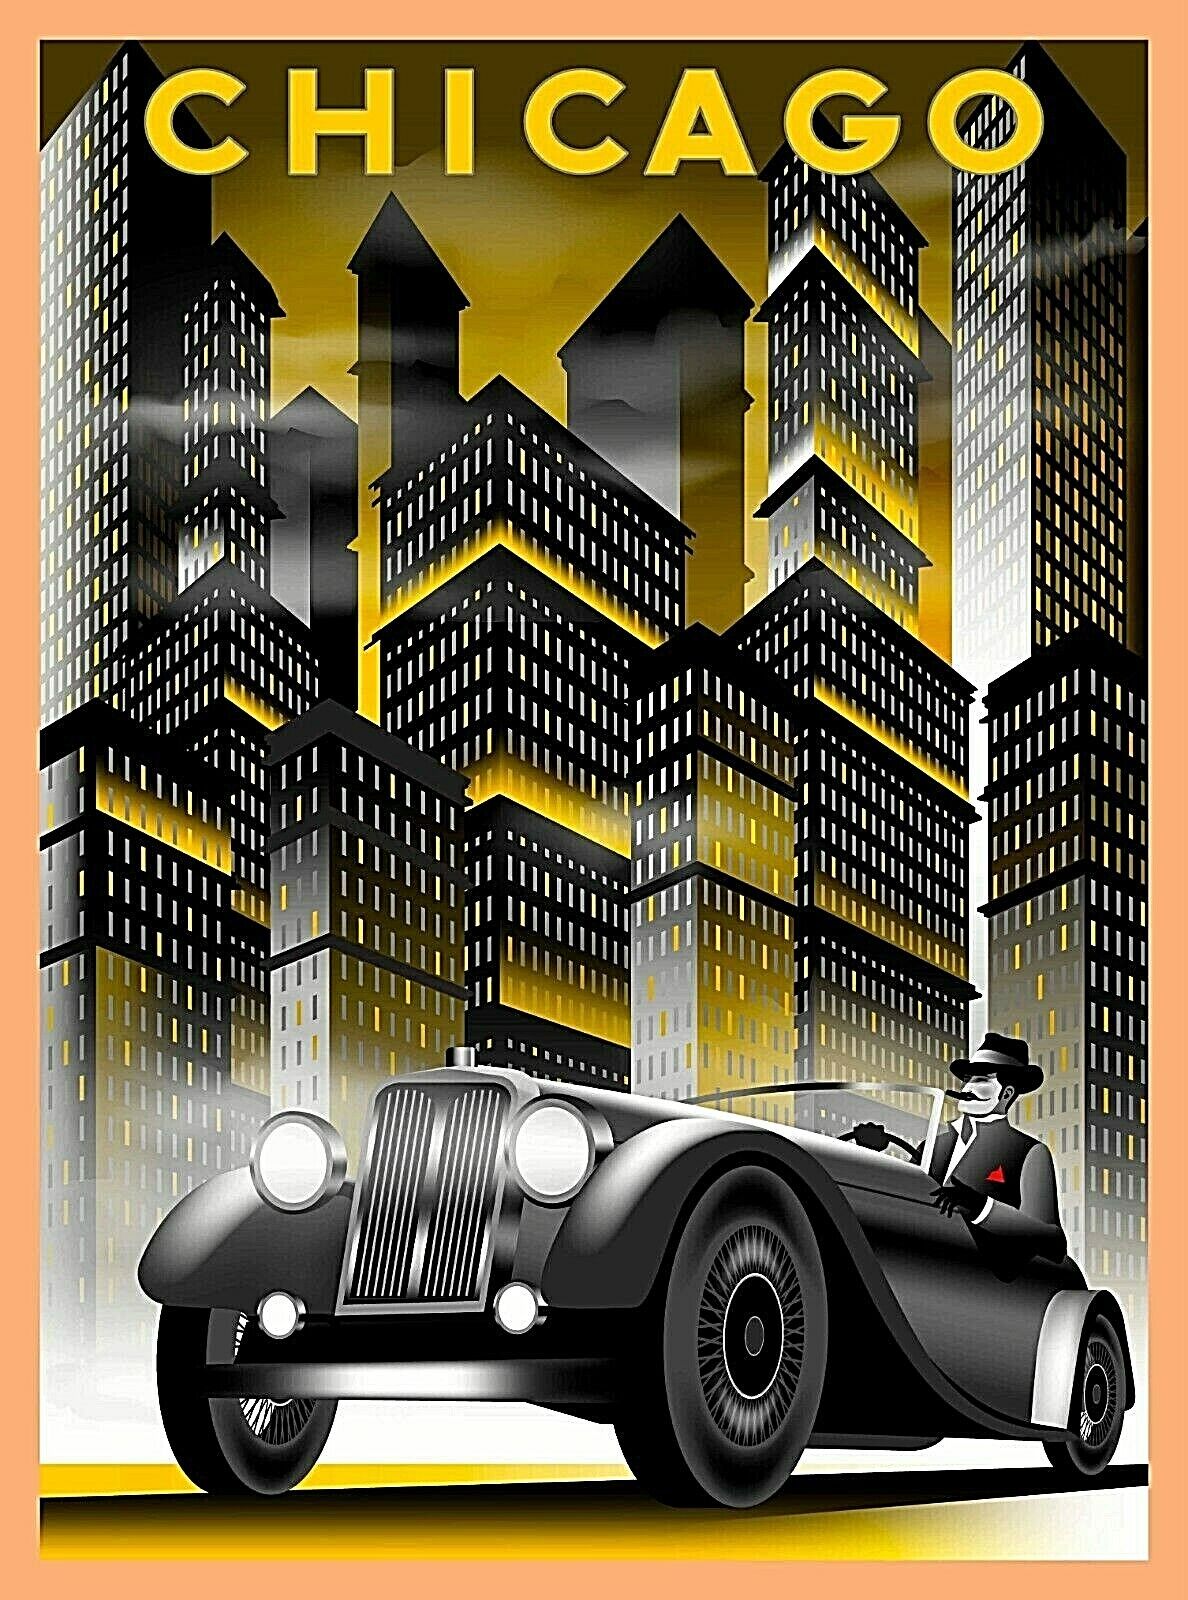 Chicago Illinois Car & Buildings Retro Travel Art Deco Poster Print